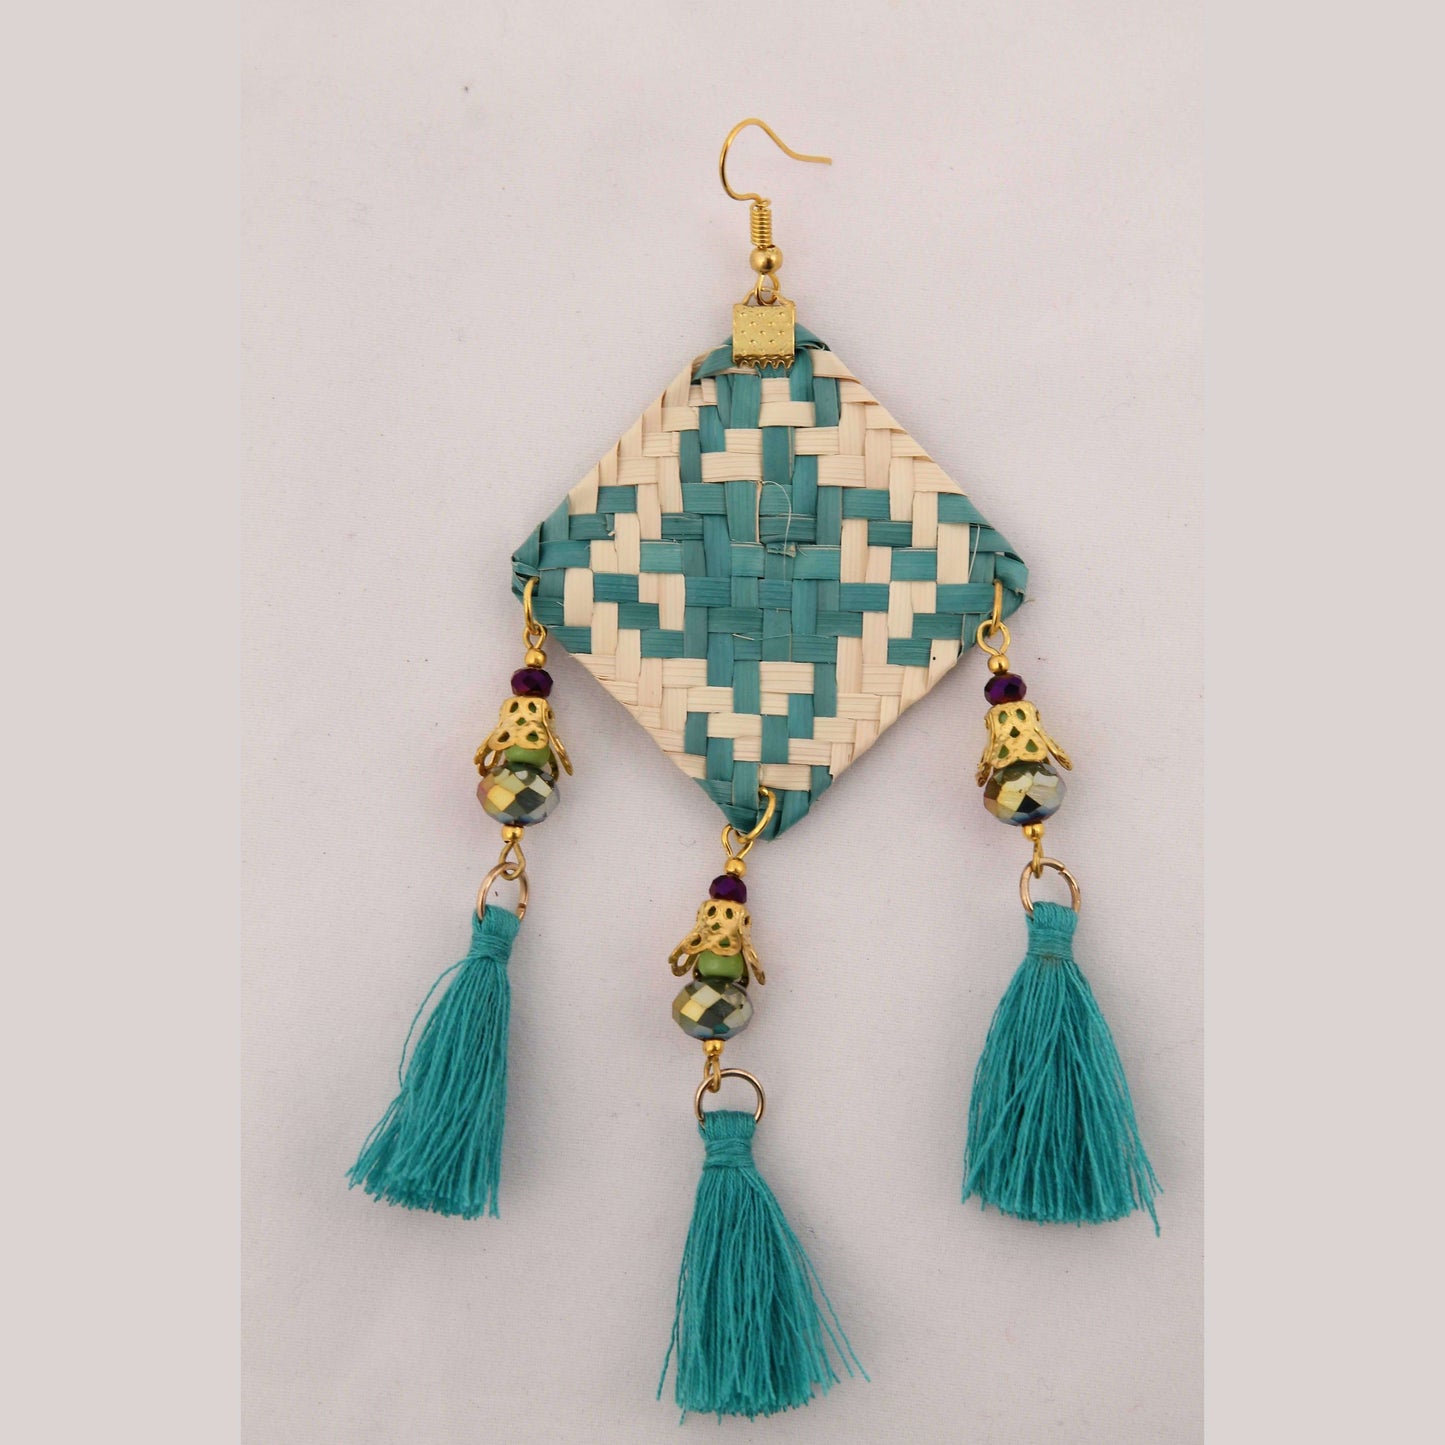 Hand Crafted Woven Palm Earrings Jewelry Mexican Folk Wearable Art Oaxaca Turq